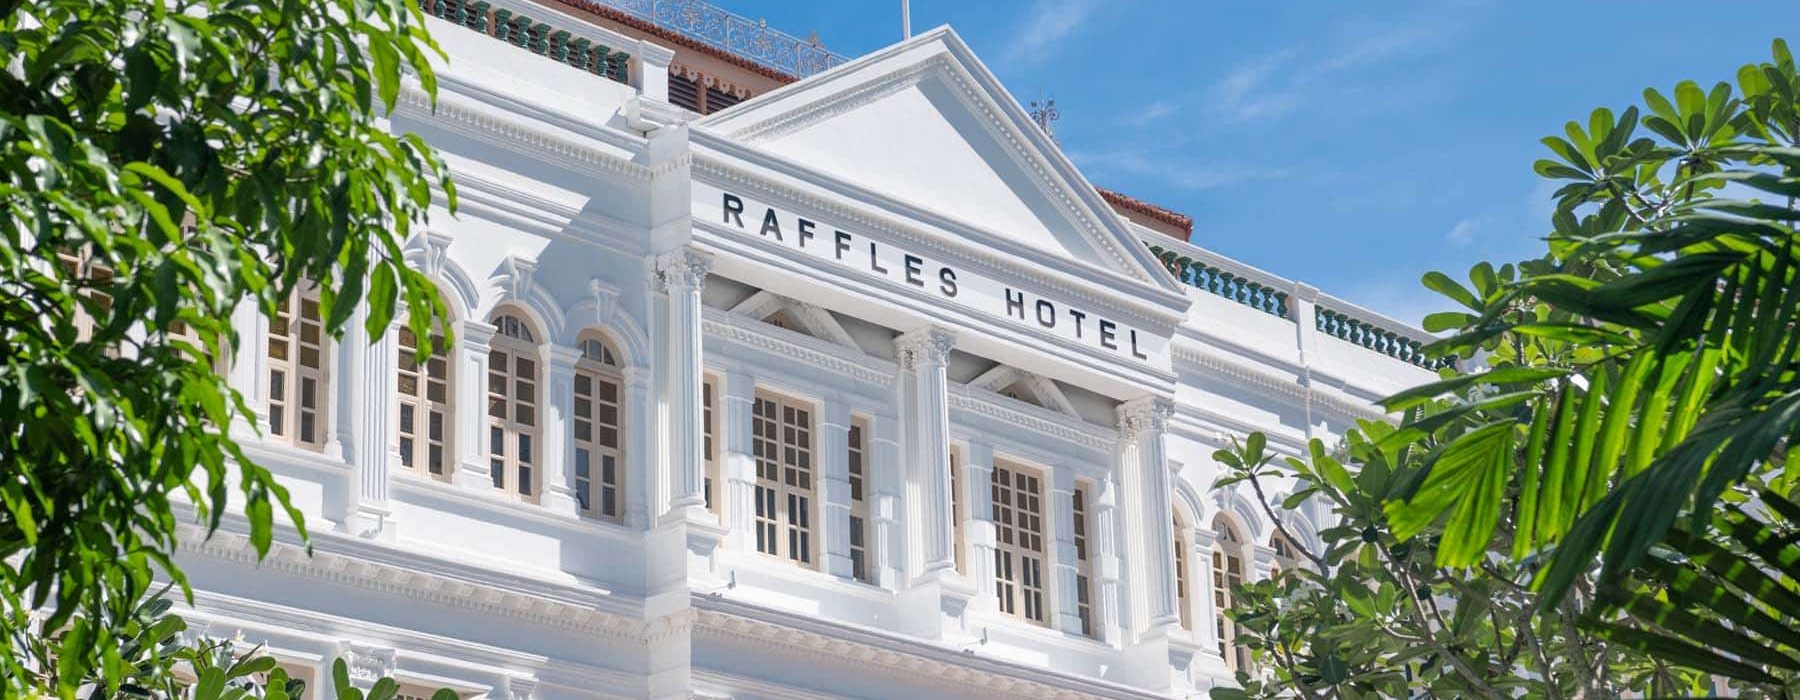 Raffles Singapore - Reflections of Raffles